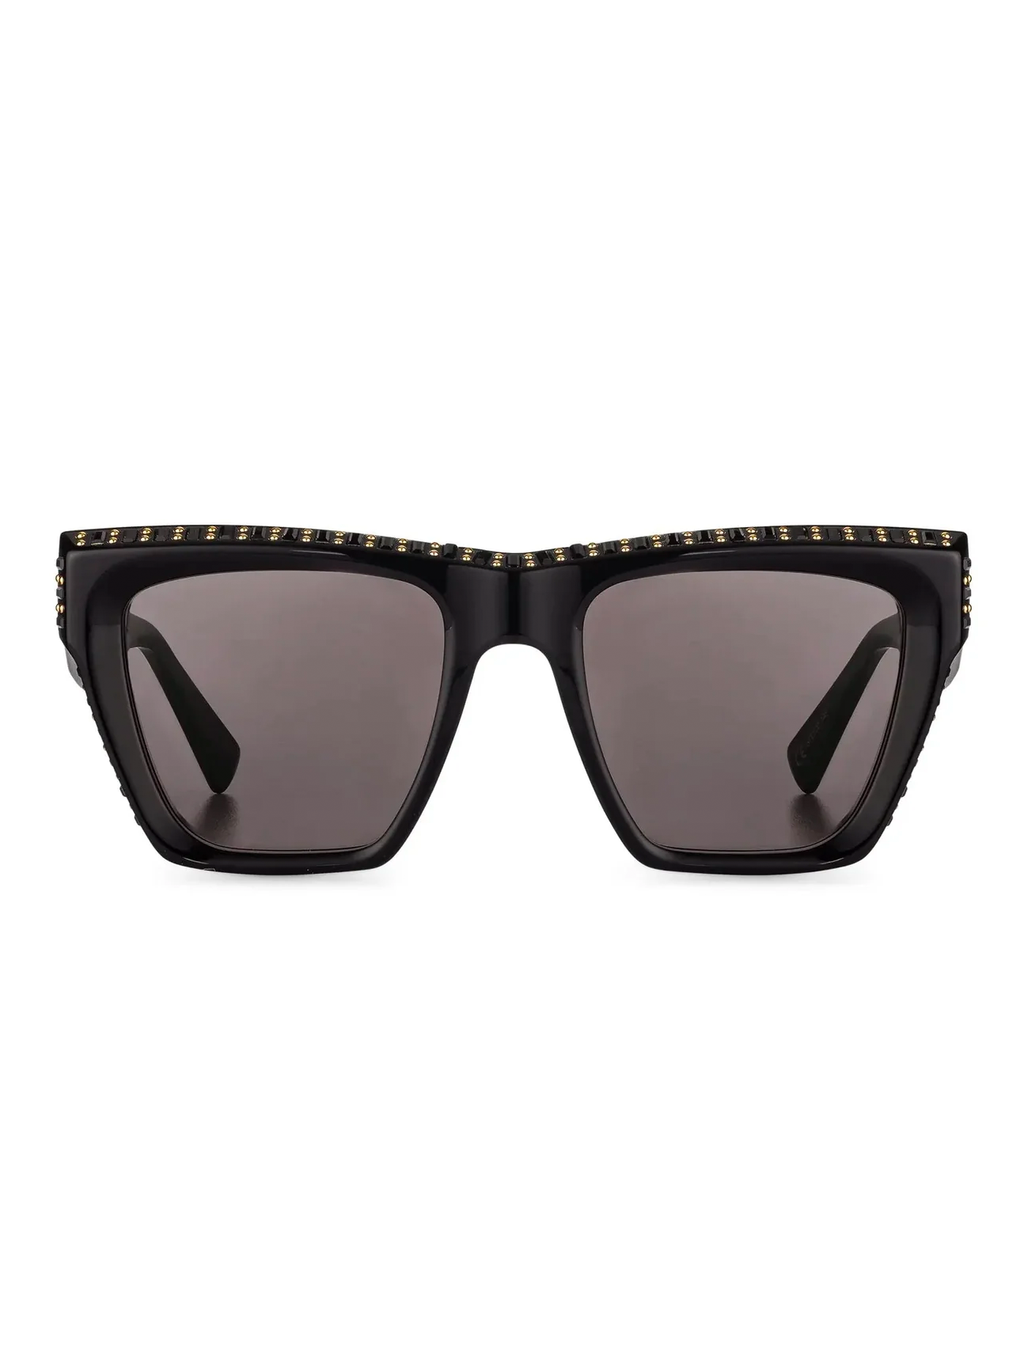 Trendkill Black & Gold Sunglasses